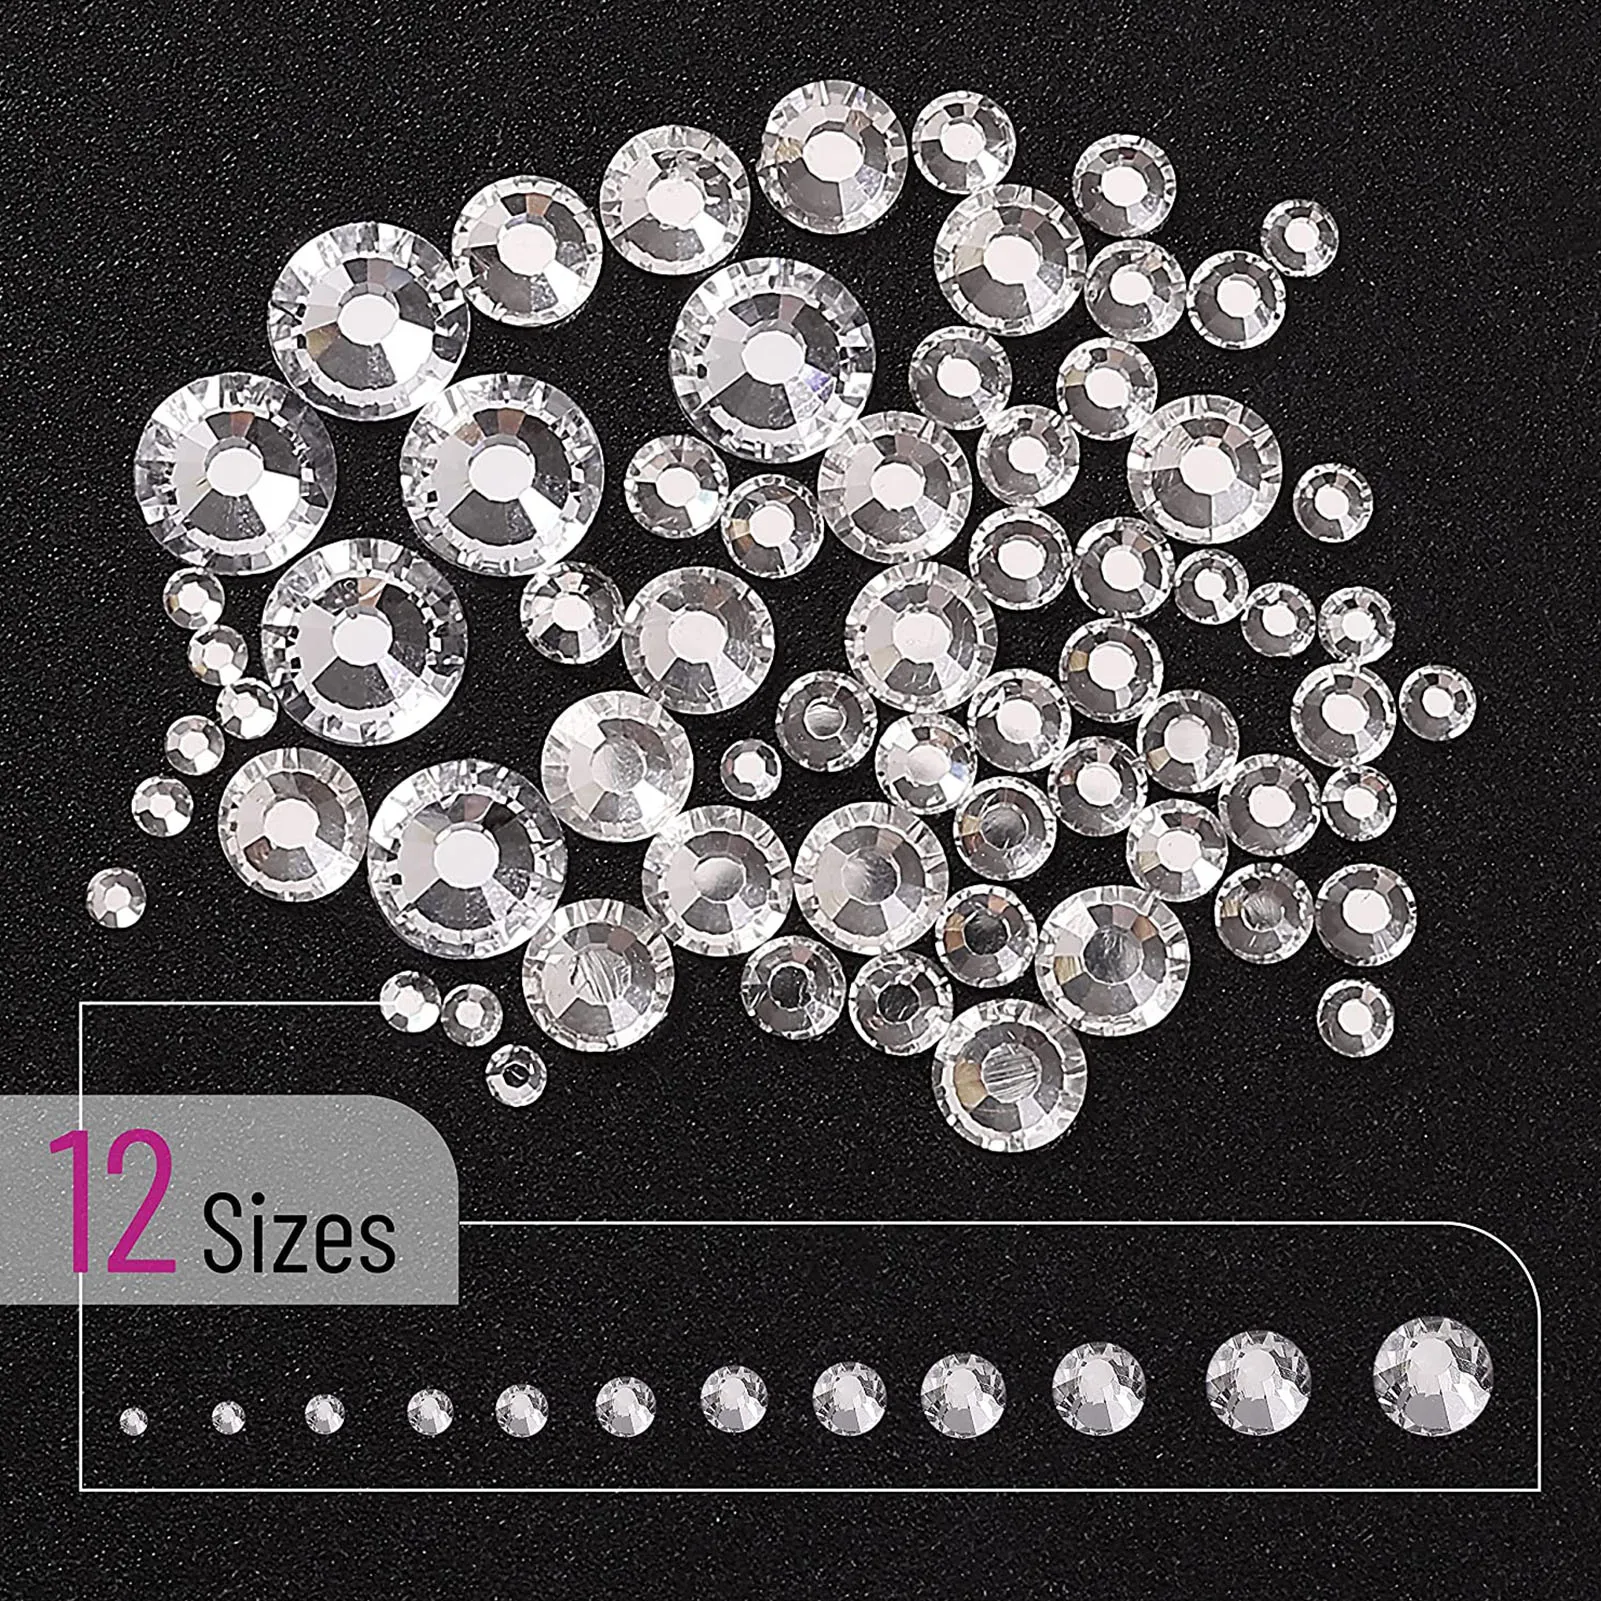 2000pcs Nail Gems And Rhinestones 6 Mixed Size Crystal Flatback Rhinestones For Crafts 12 Grids Rinestons Diamonds Gems Glitter